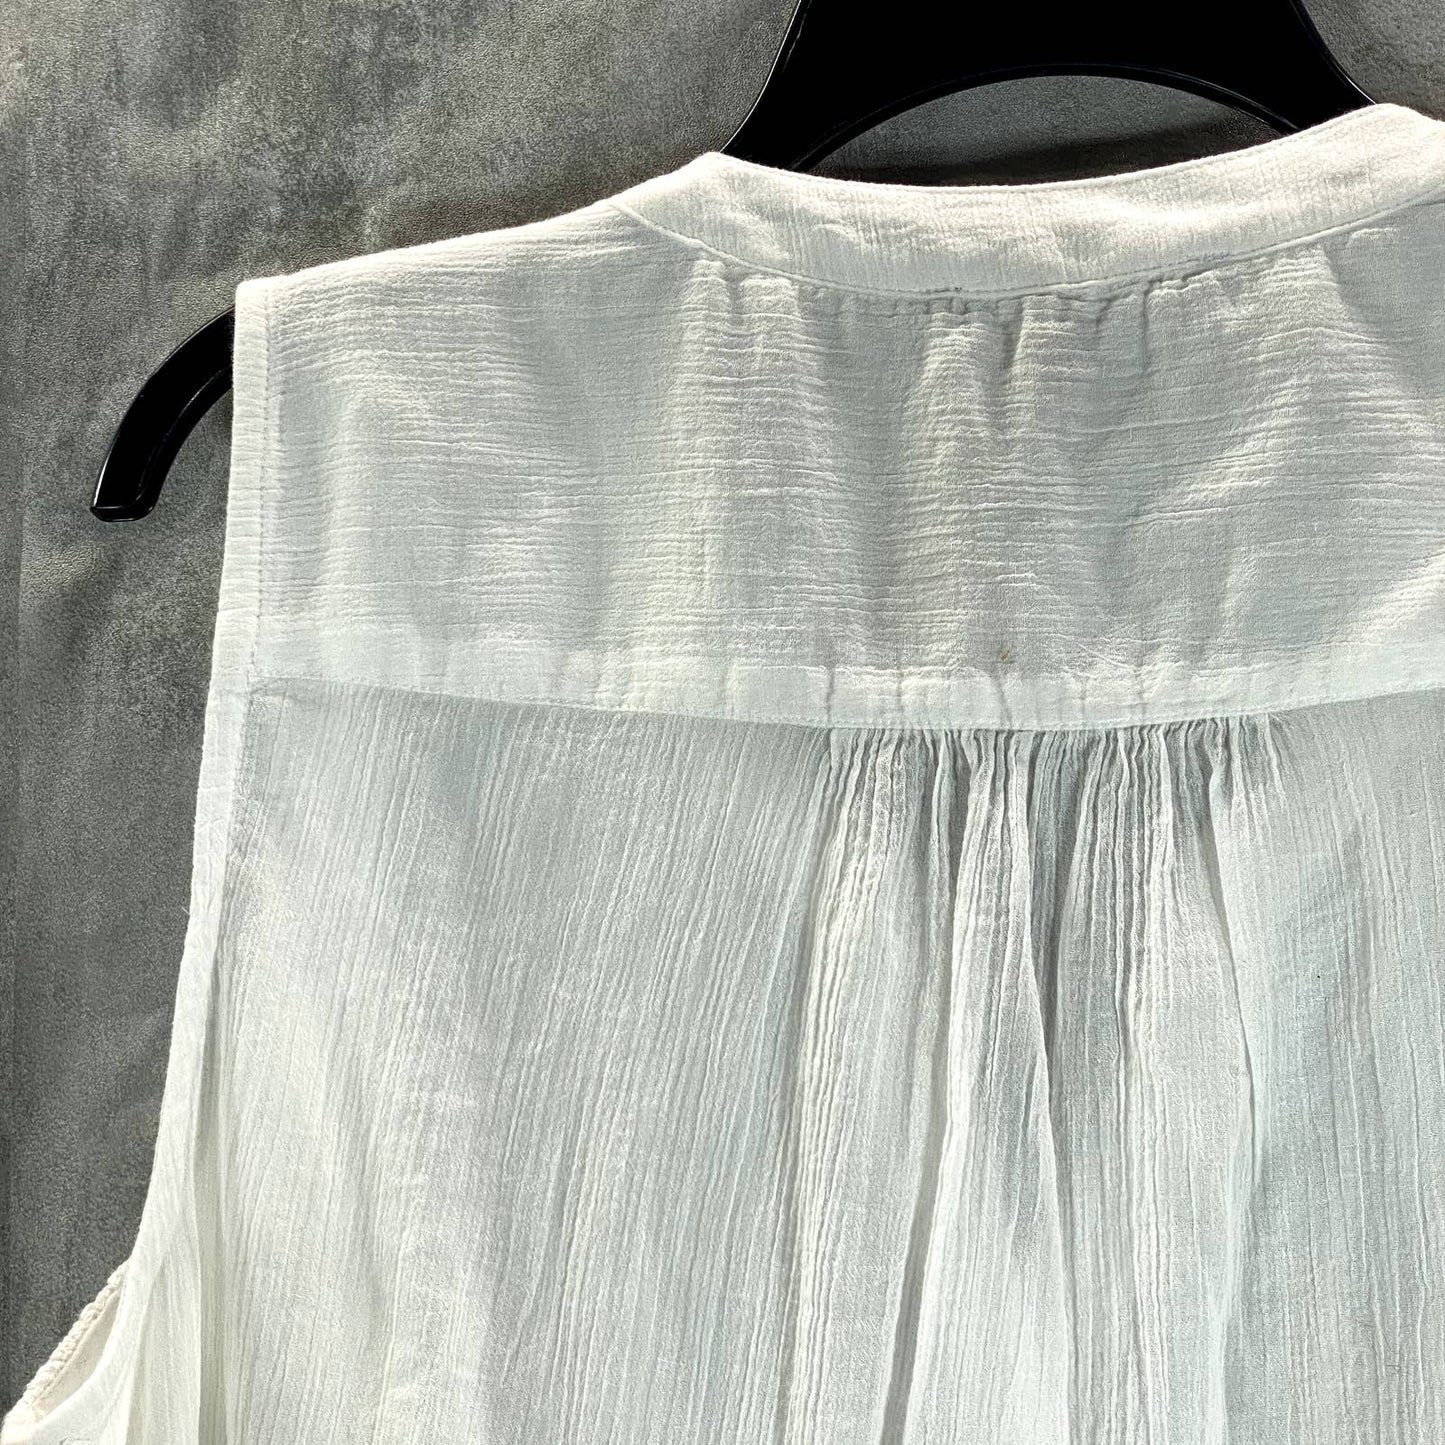 TOMMY HILFIGER Women's Bright White Cotton Spilt-Neck Embroidery-Trim Top SZ XL